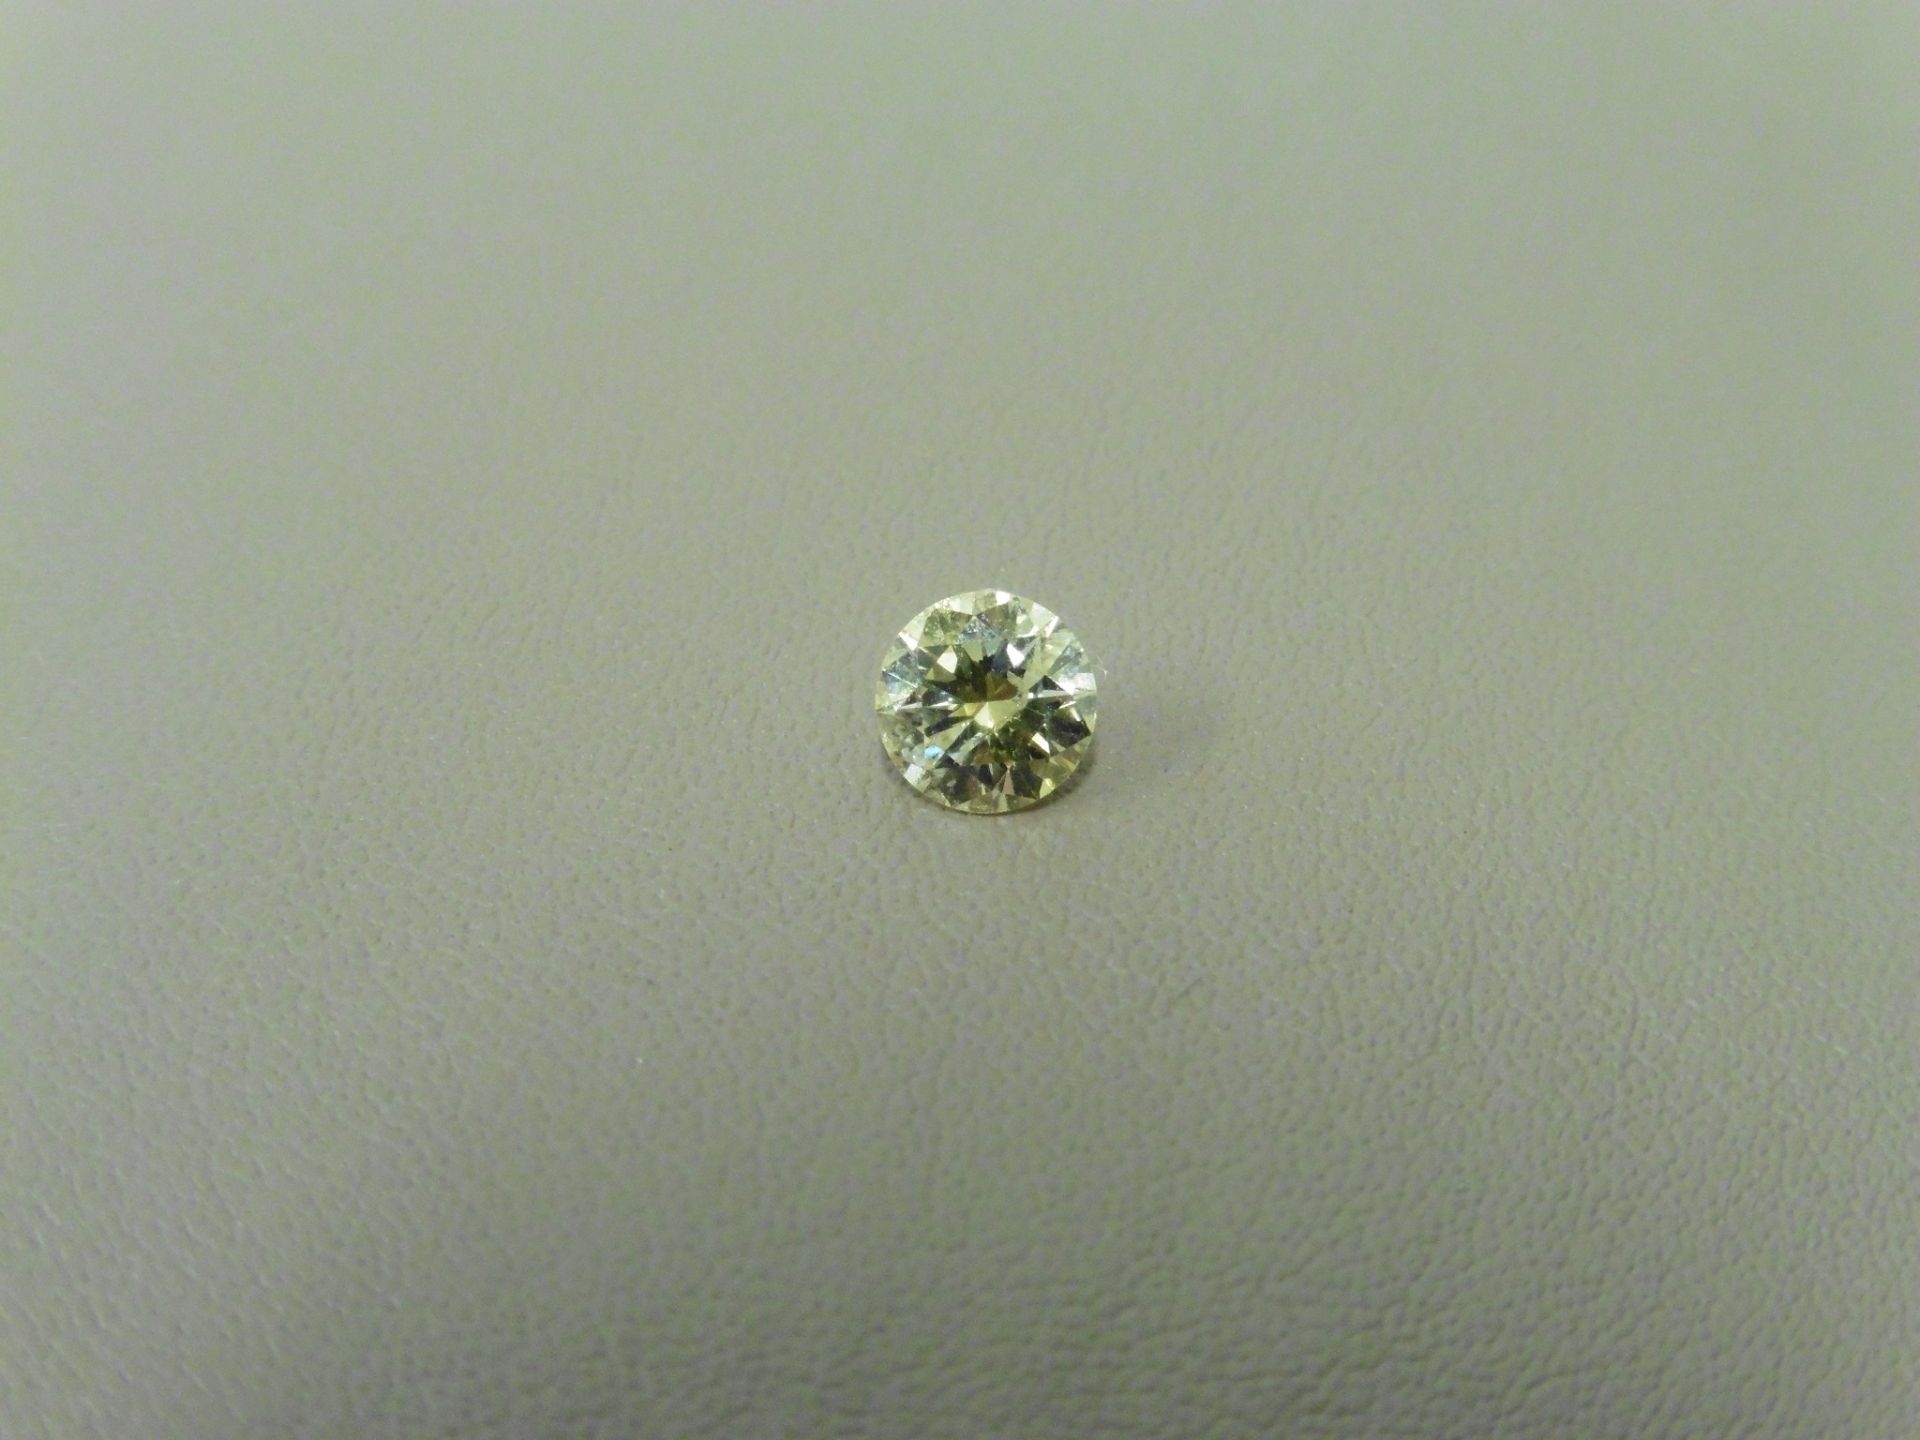 0.51ct brilliant cut diamond. Fancy yellow colour, SI2 clarity. AGI Certificate Ð 975781. Valued